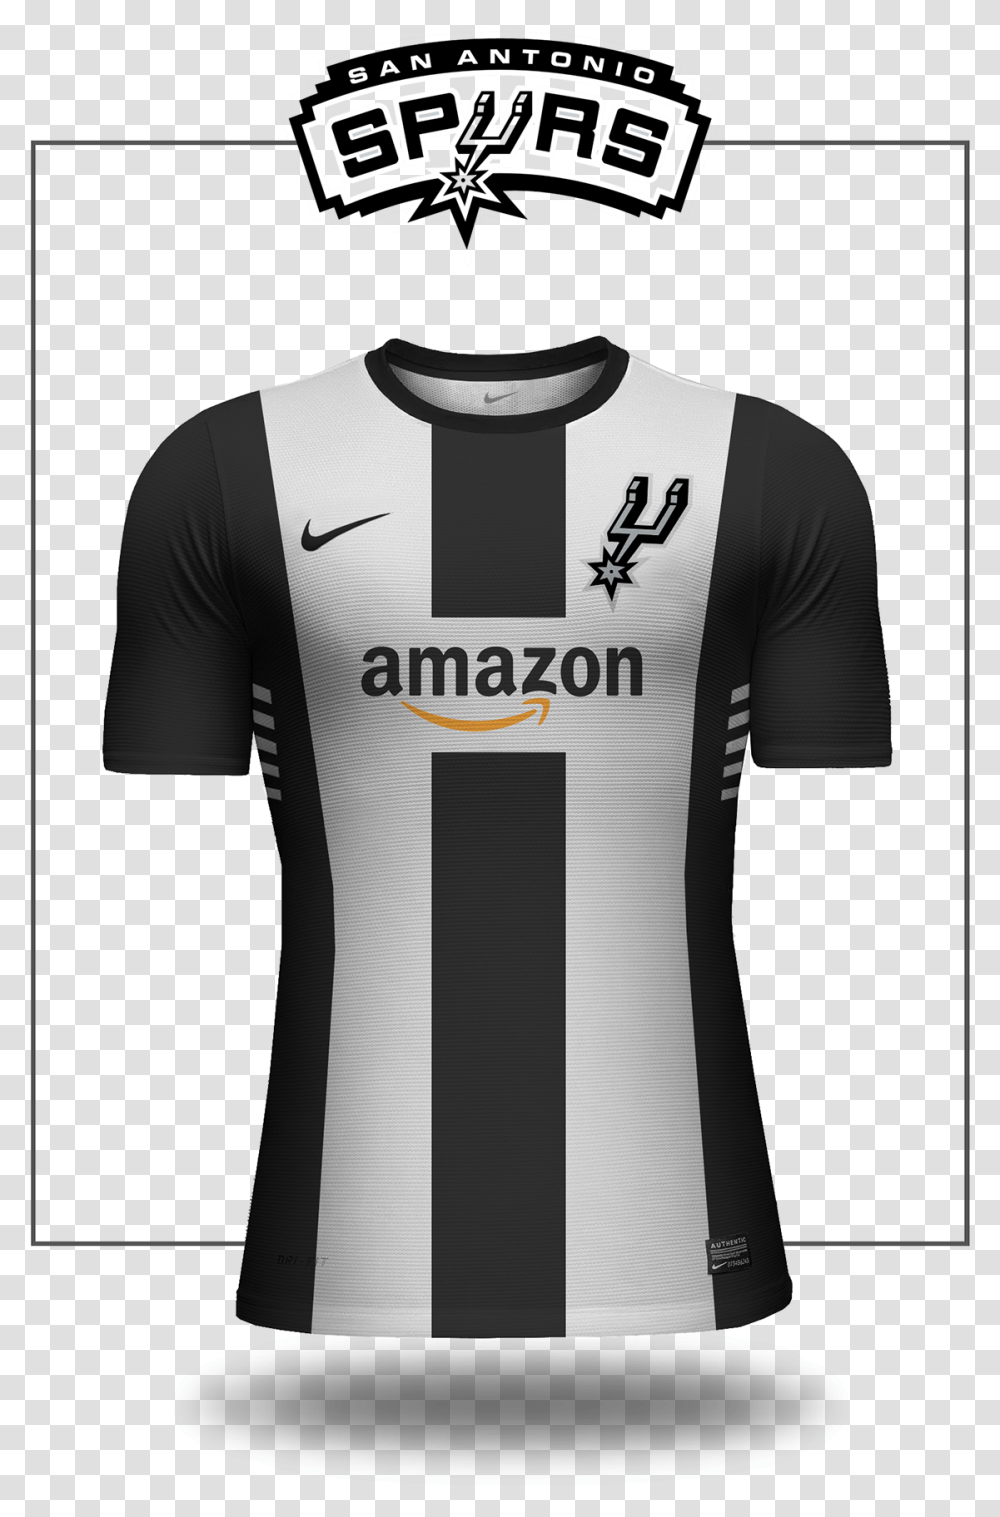 San Antonio Spurs Logo Download San Antonio Spurs Sponsor Jersey, Apparel, Shirt, Person Transparent Png